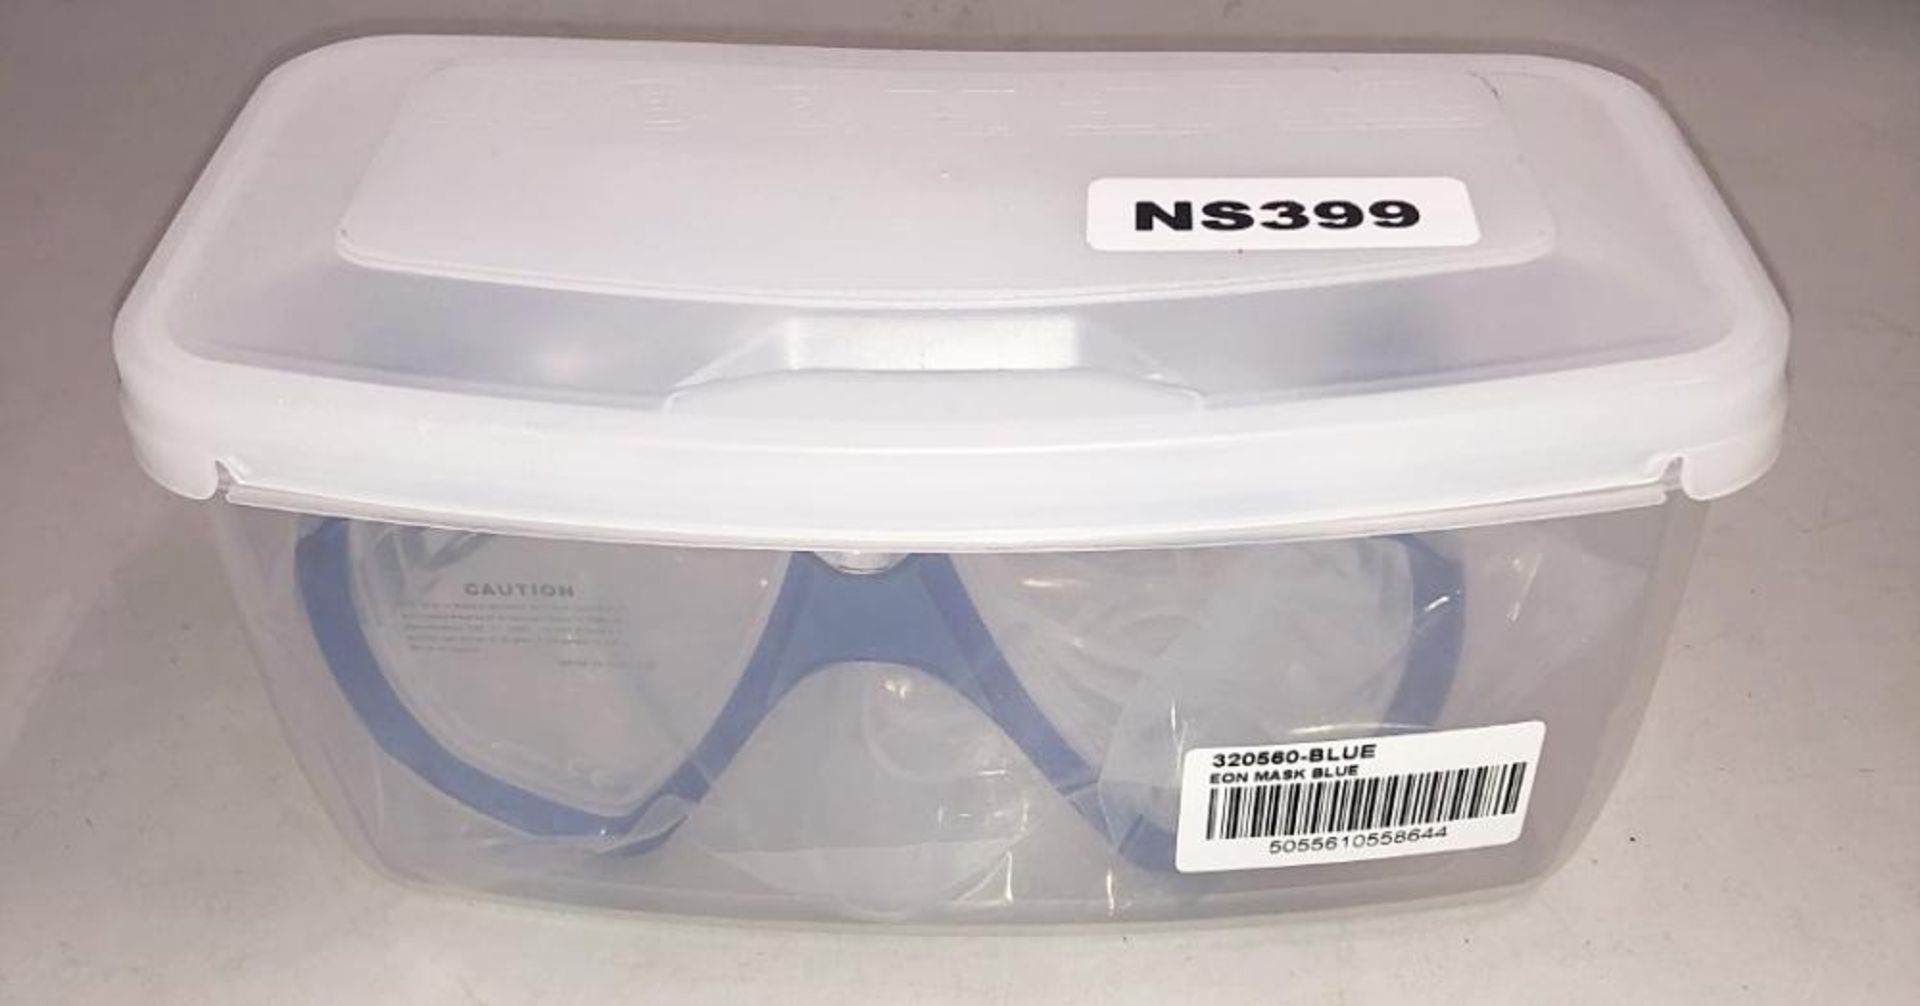 8 x New Pairs Of Branded Diving Masks - Ref: NS397, NS398, NS399, NS400, NS401, NS402, NS403, NS404 - Image 13 of 27